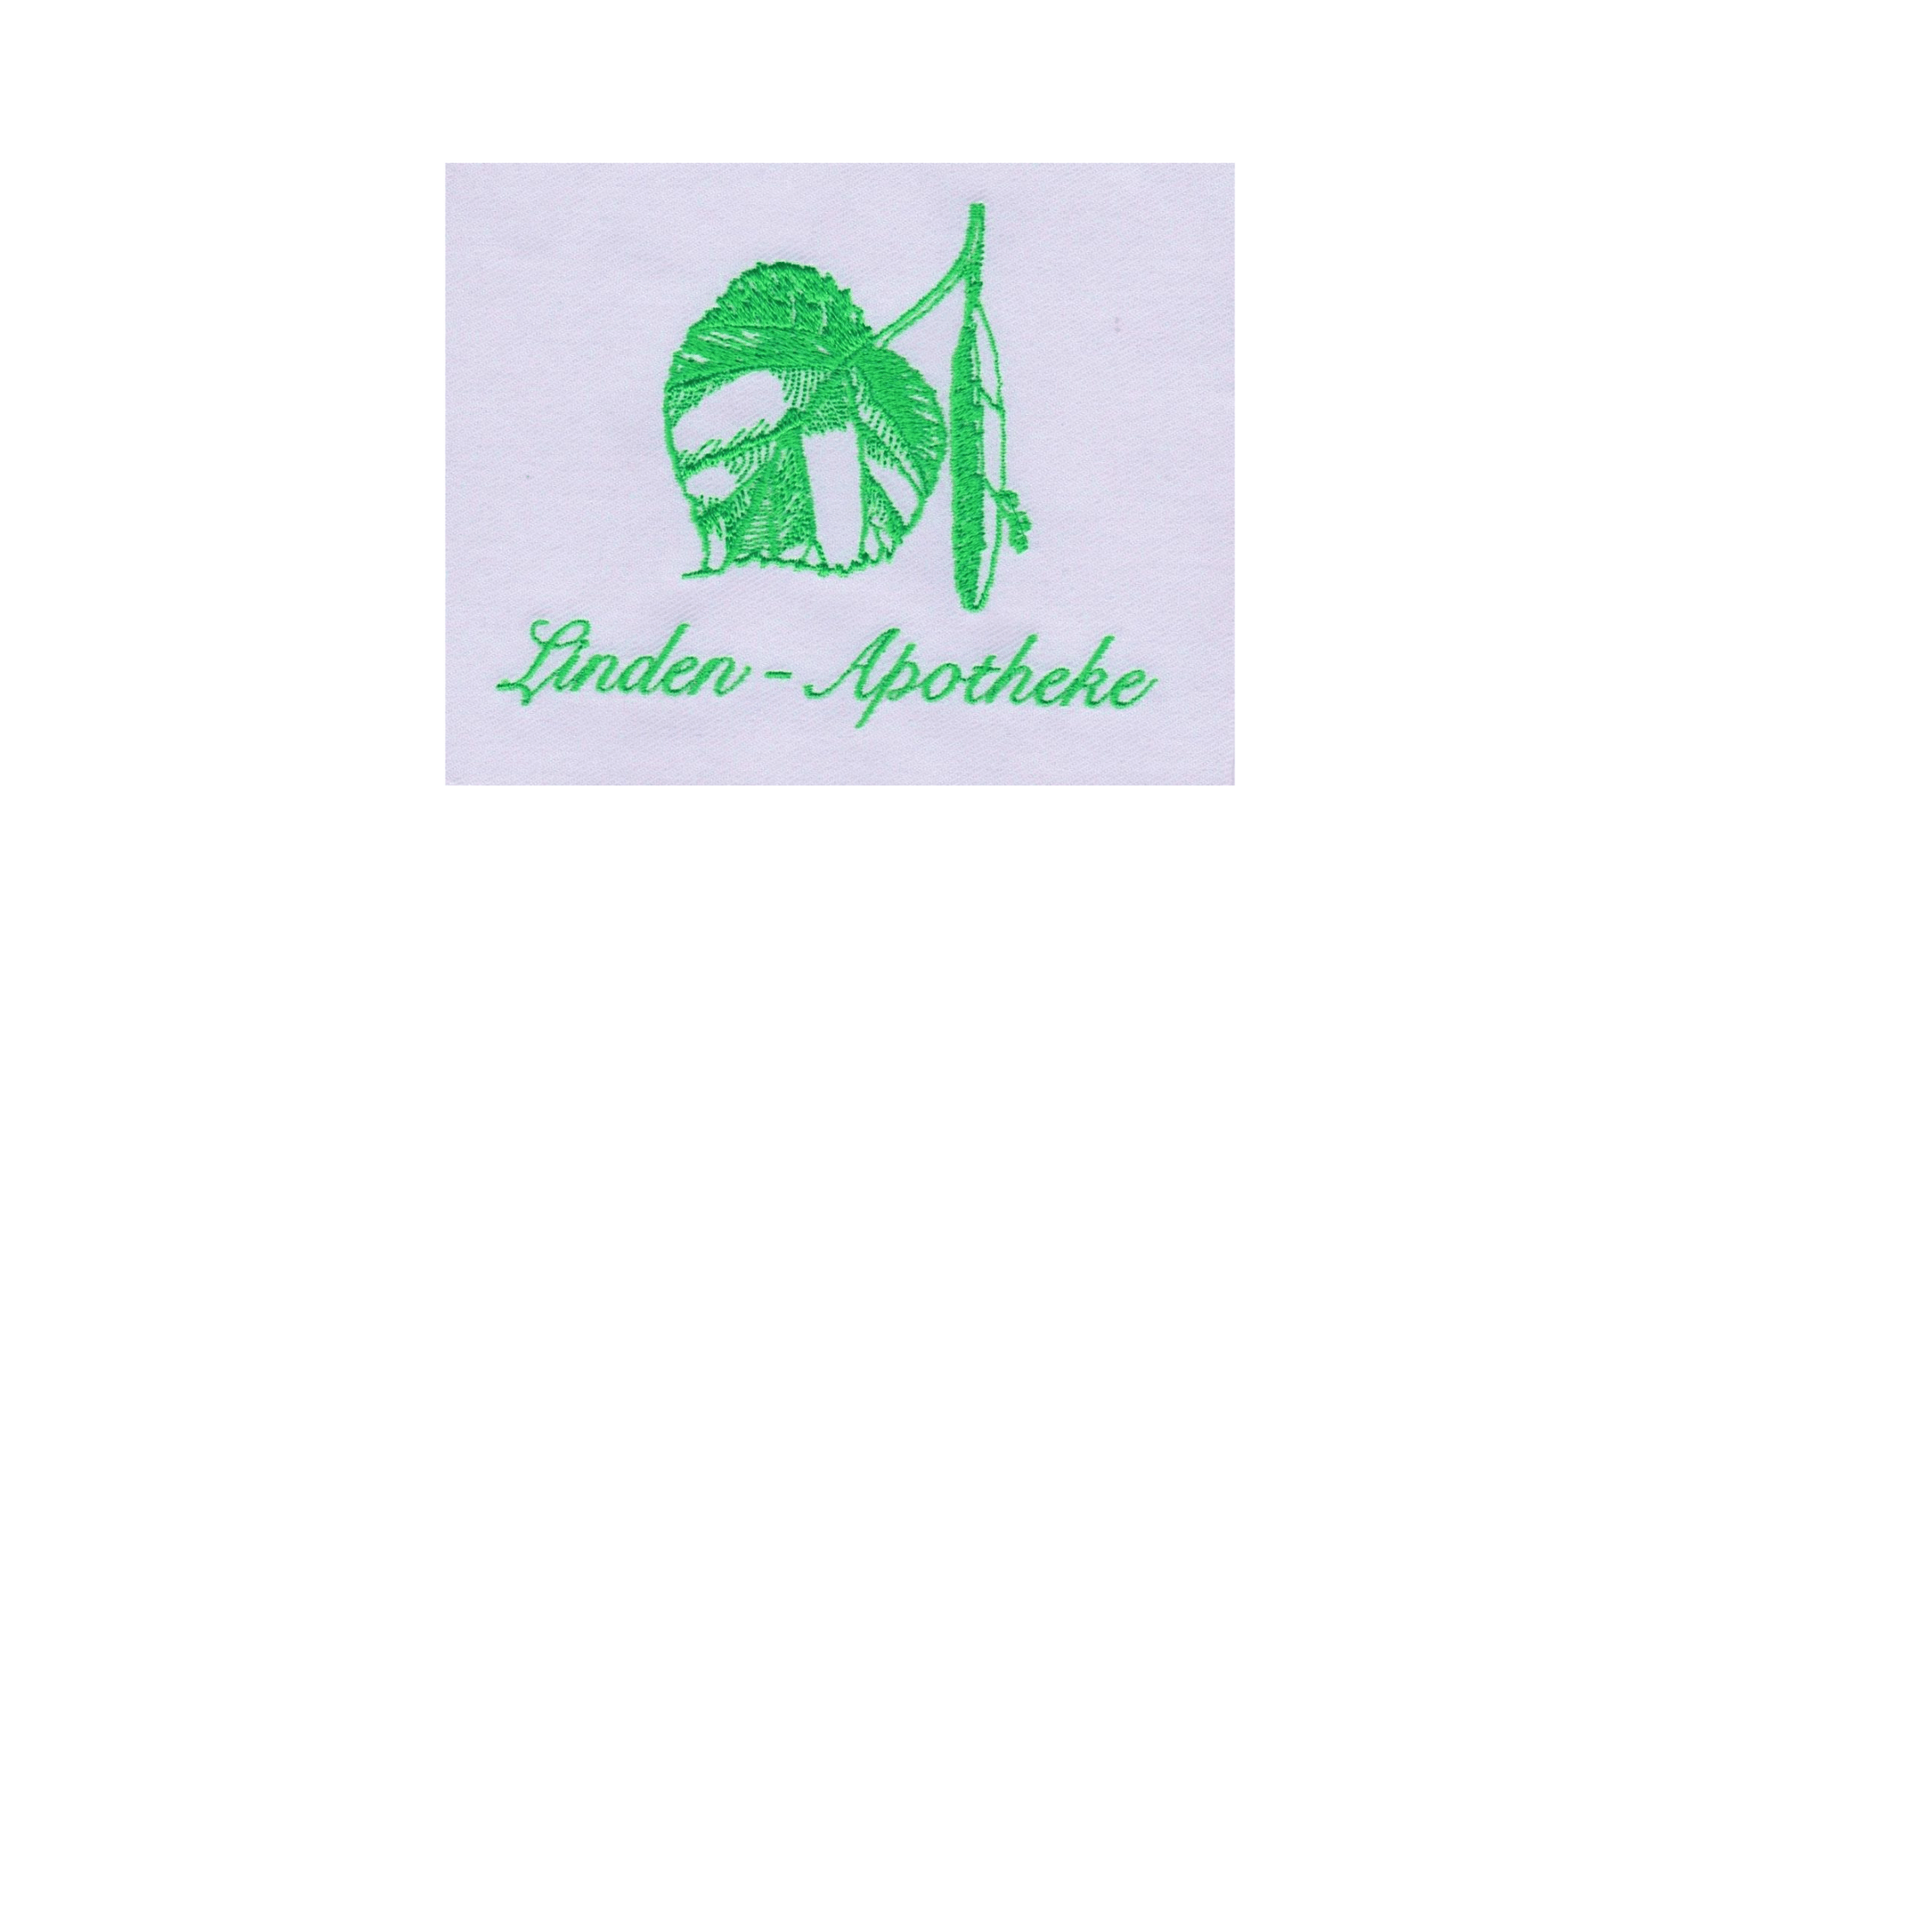 Linden-Apotheke in Neubrandenburg - Logo